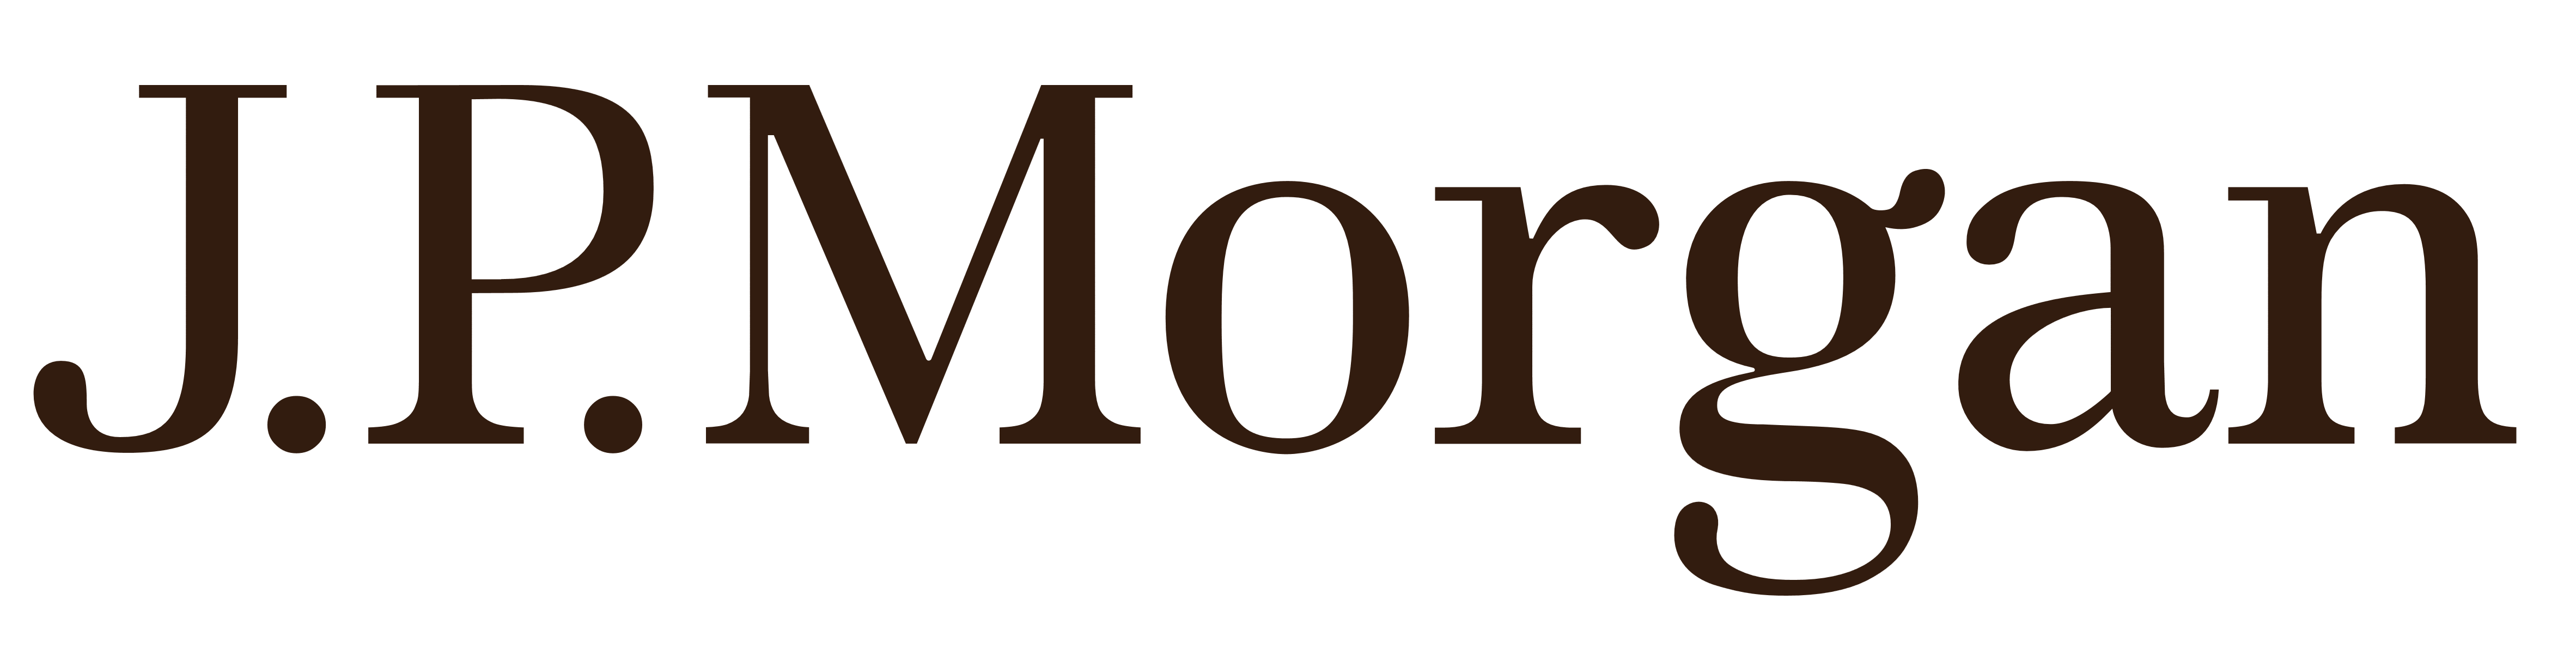 Logo for JP Morgan